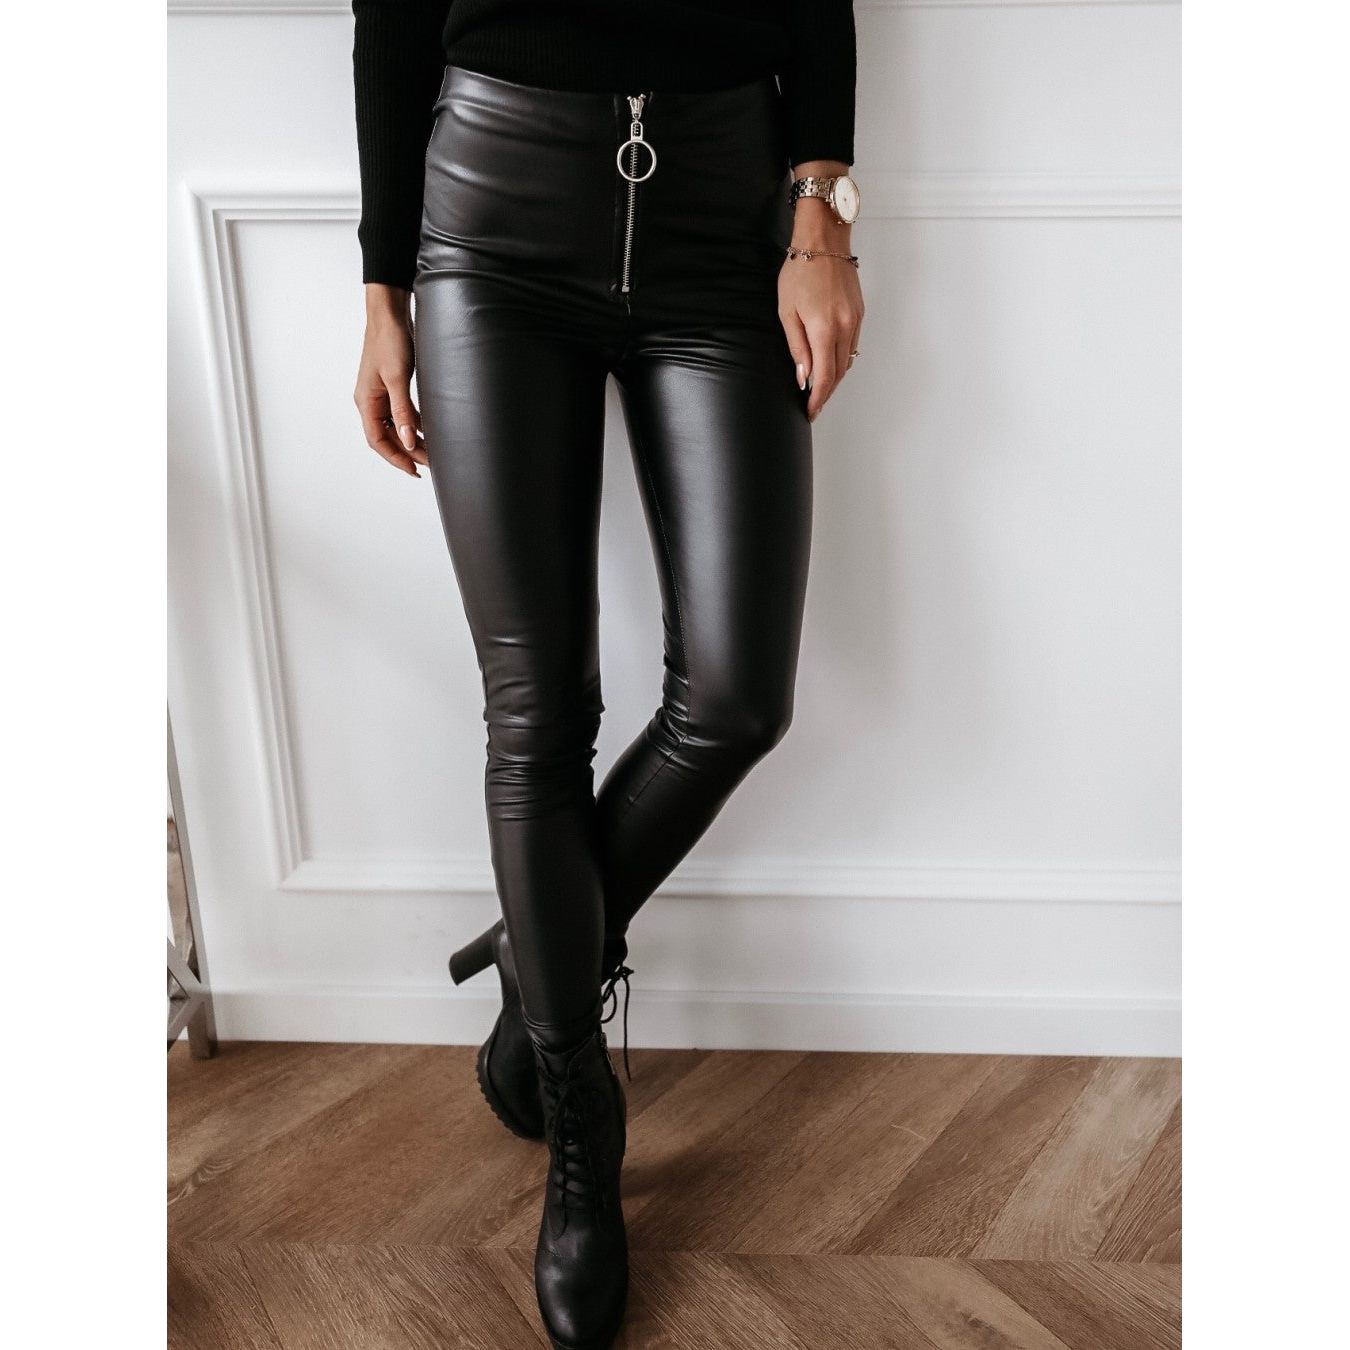 fashion ladies leather pant